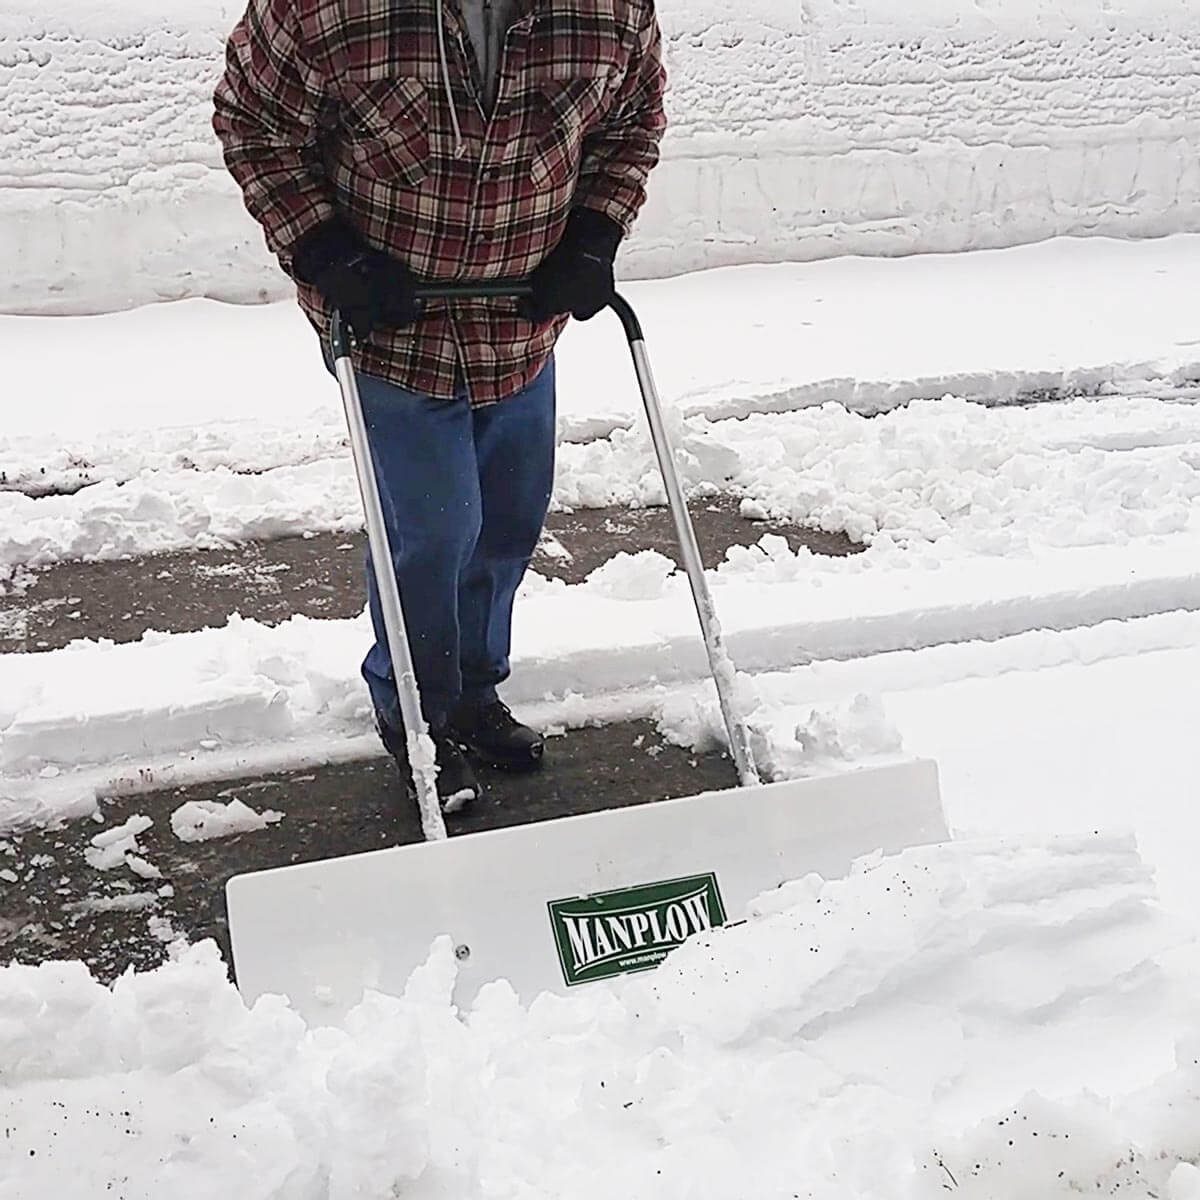 manplowhandplow snow plow tool driveway